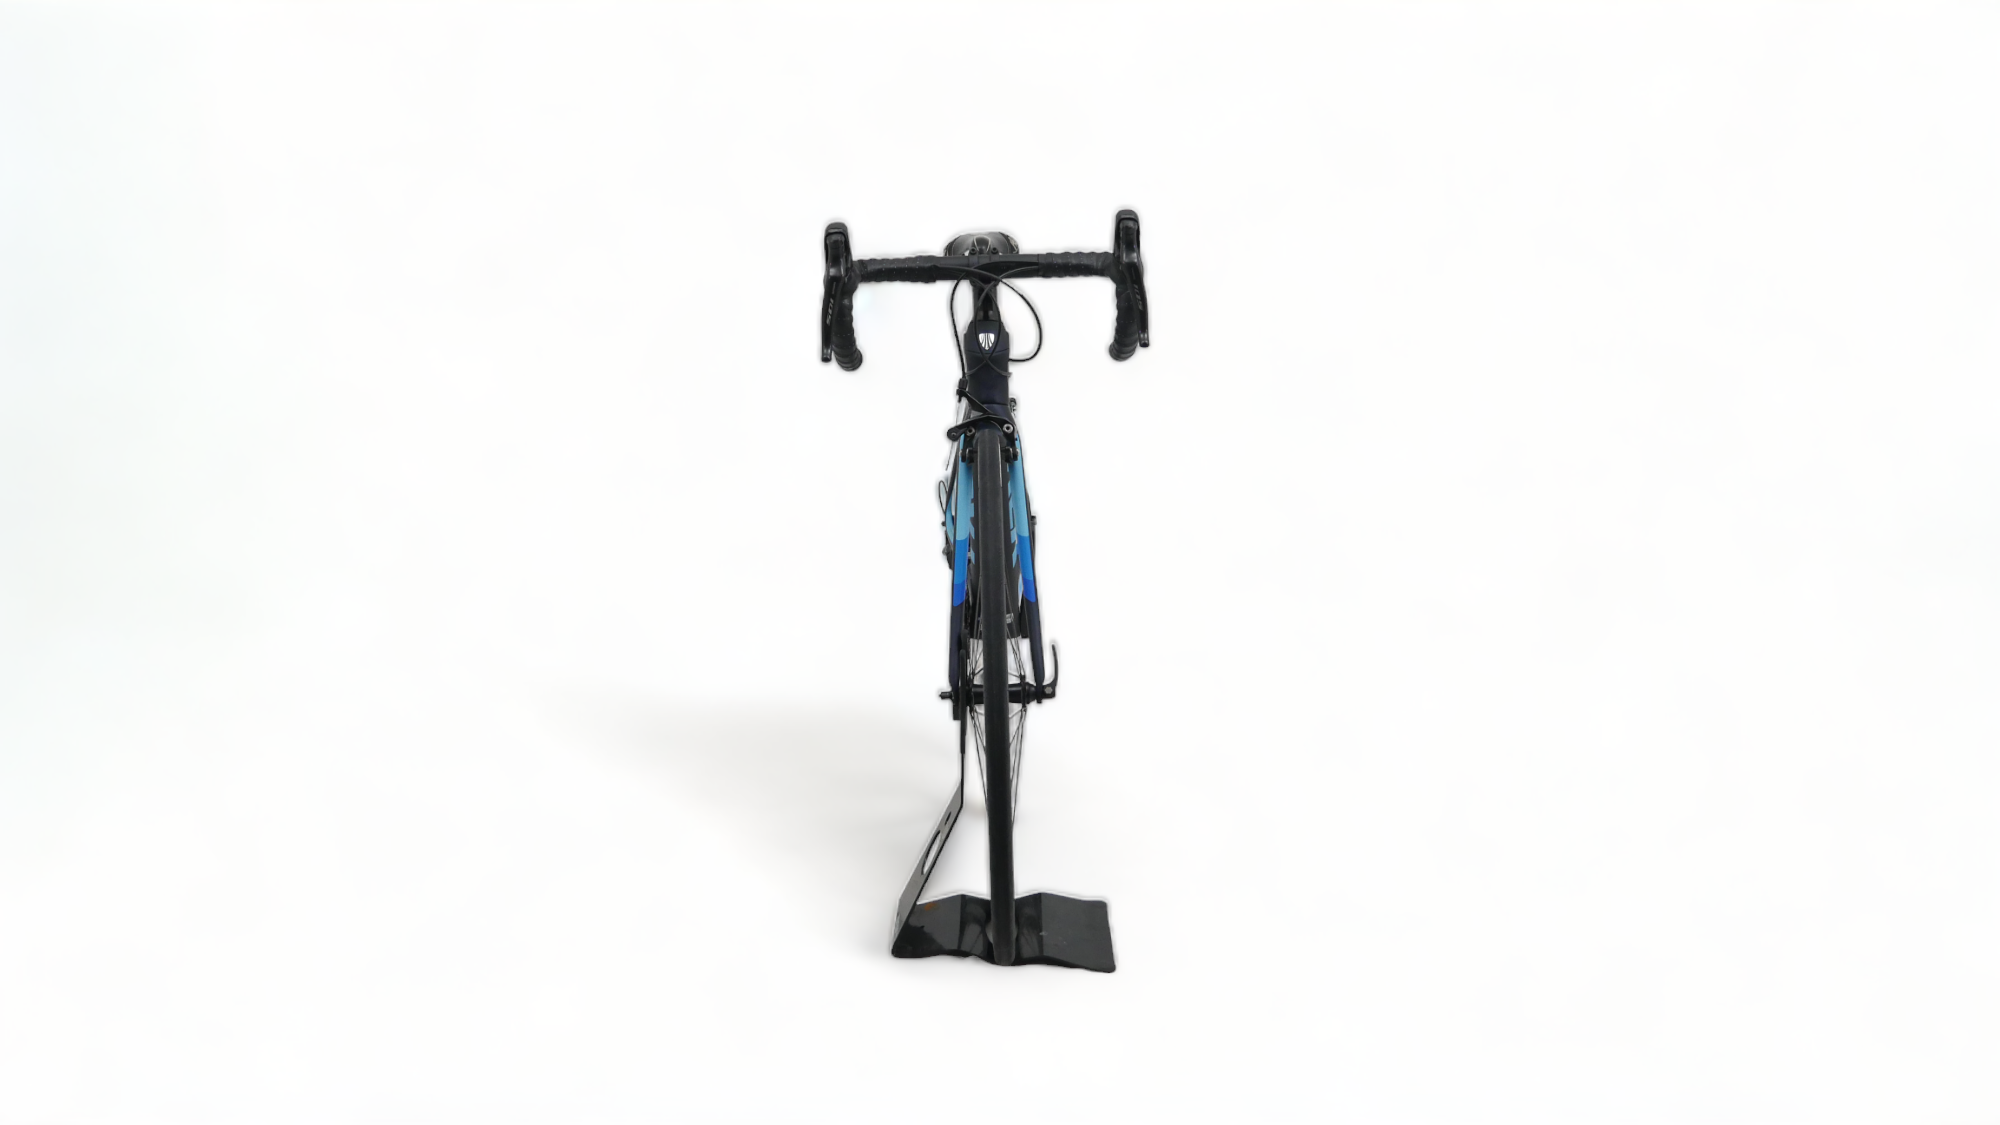 Road Bike Trek Domane SL5 Shimano 105 / Roues Bontrager Affinity Noir / Bleu